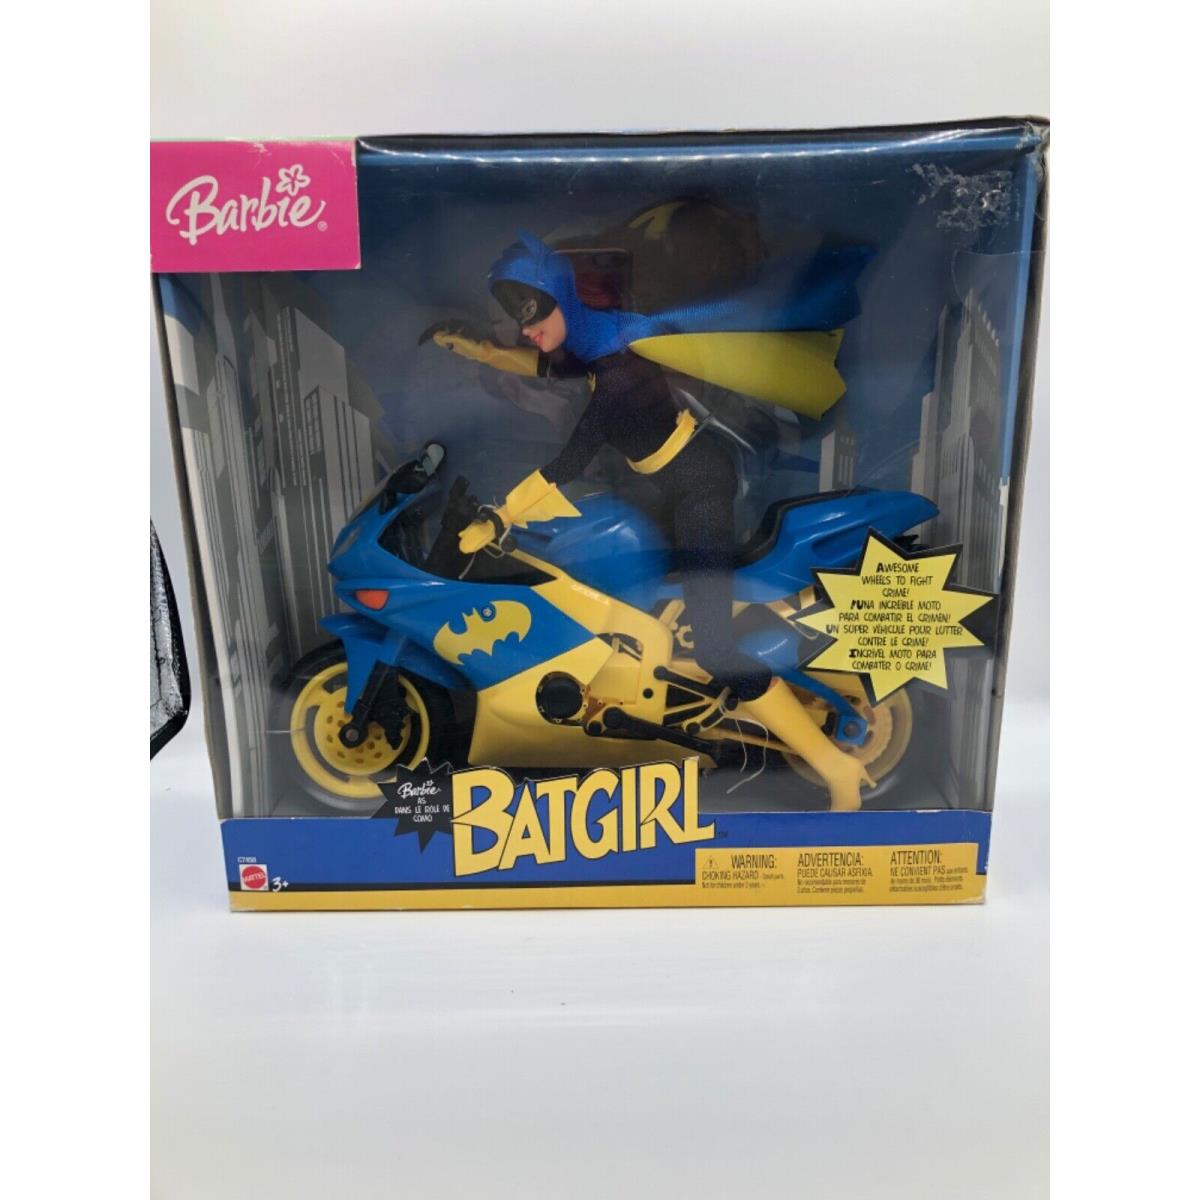 Barbie Batgirl Motorcycle Superhero Doll Cape Crusader DC Comics C7458 OS